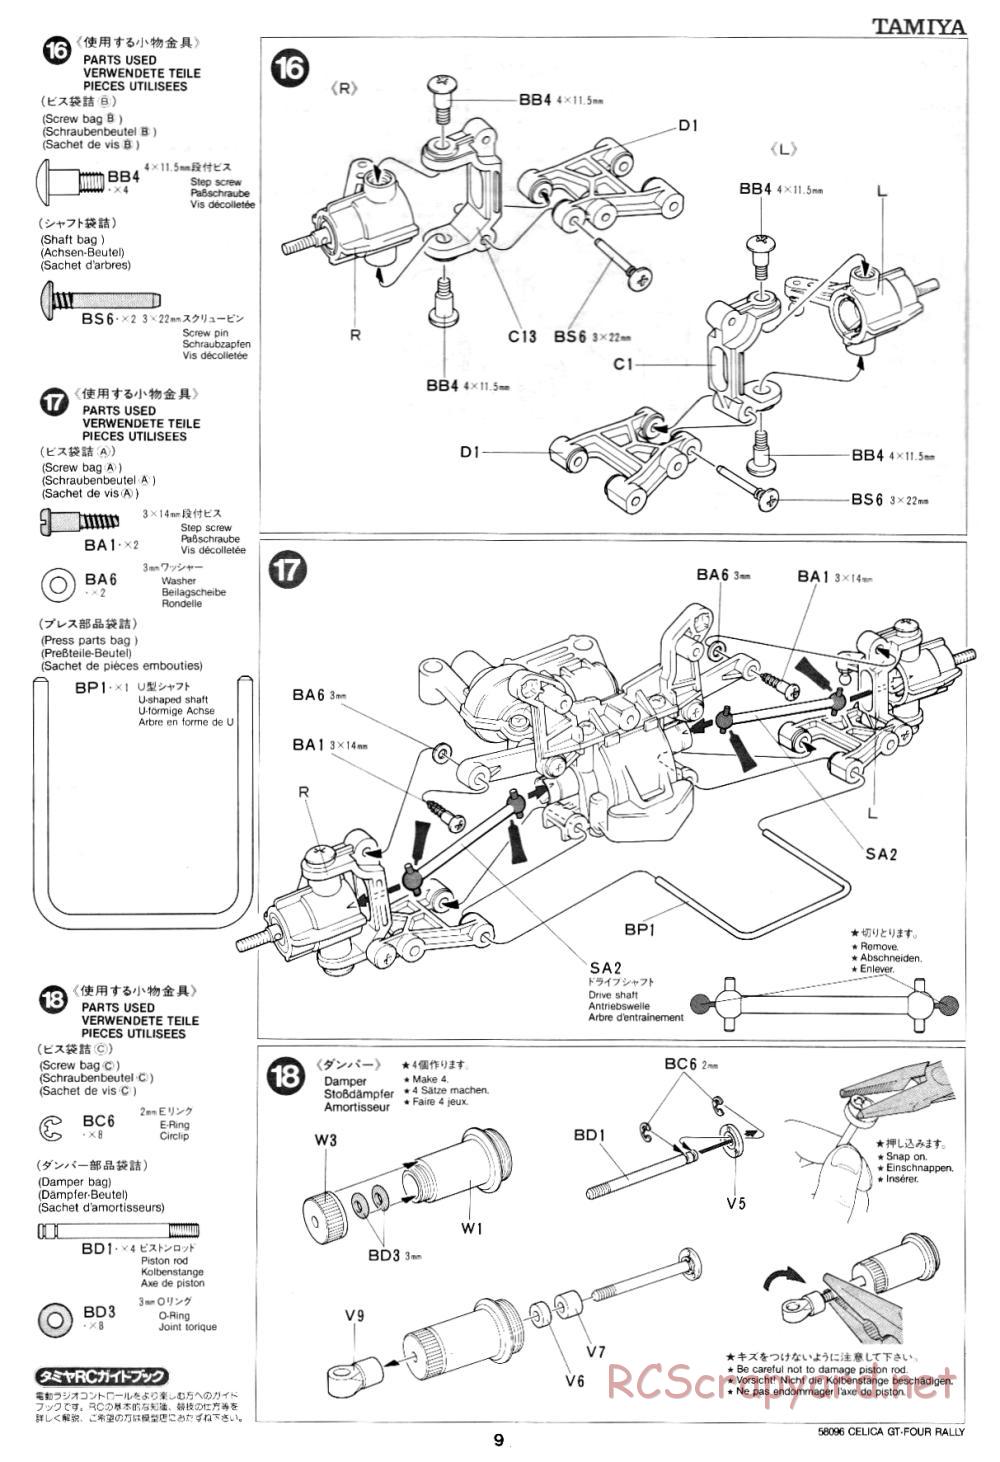 Tamiya - Toyota Celica GT-Four Rally - 58096 - Manual - Page 9